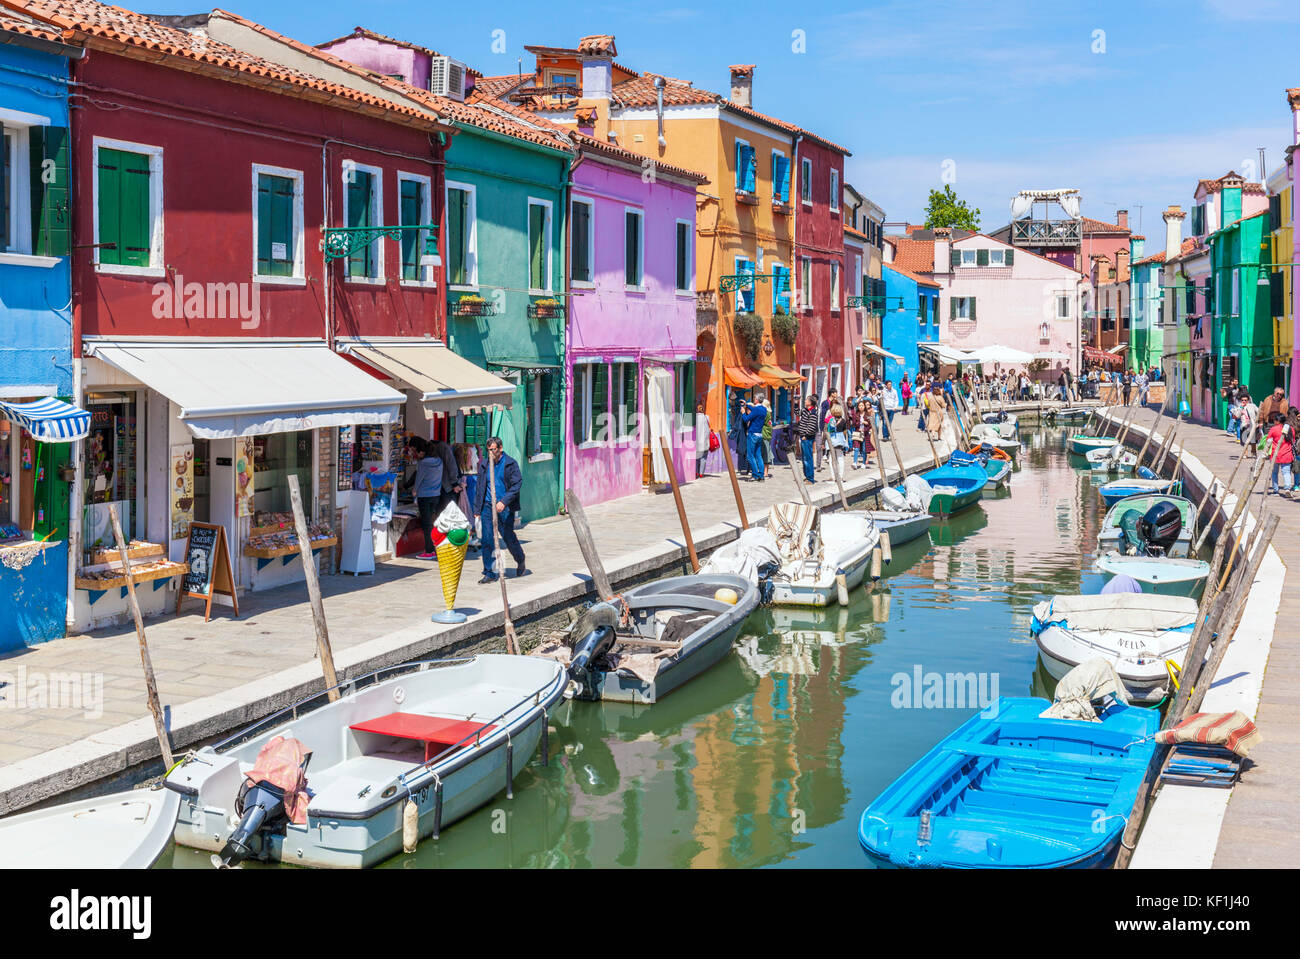 VENICE ITALY VENICE Colourful painted houses along a canal on the Island of Burano Venice lagoon Metropolitan City of Venice Italy EU Europe Stock Photo